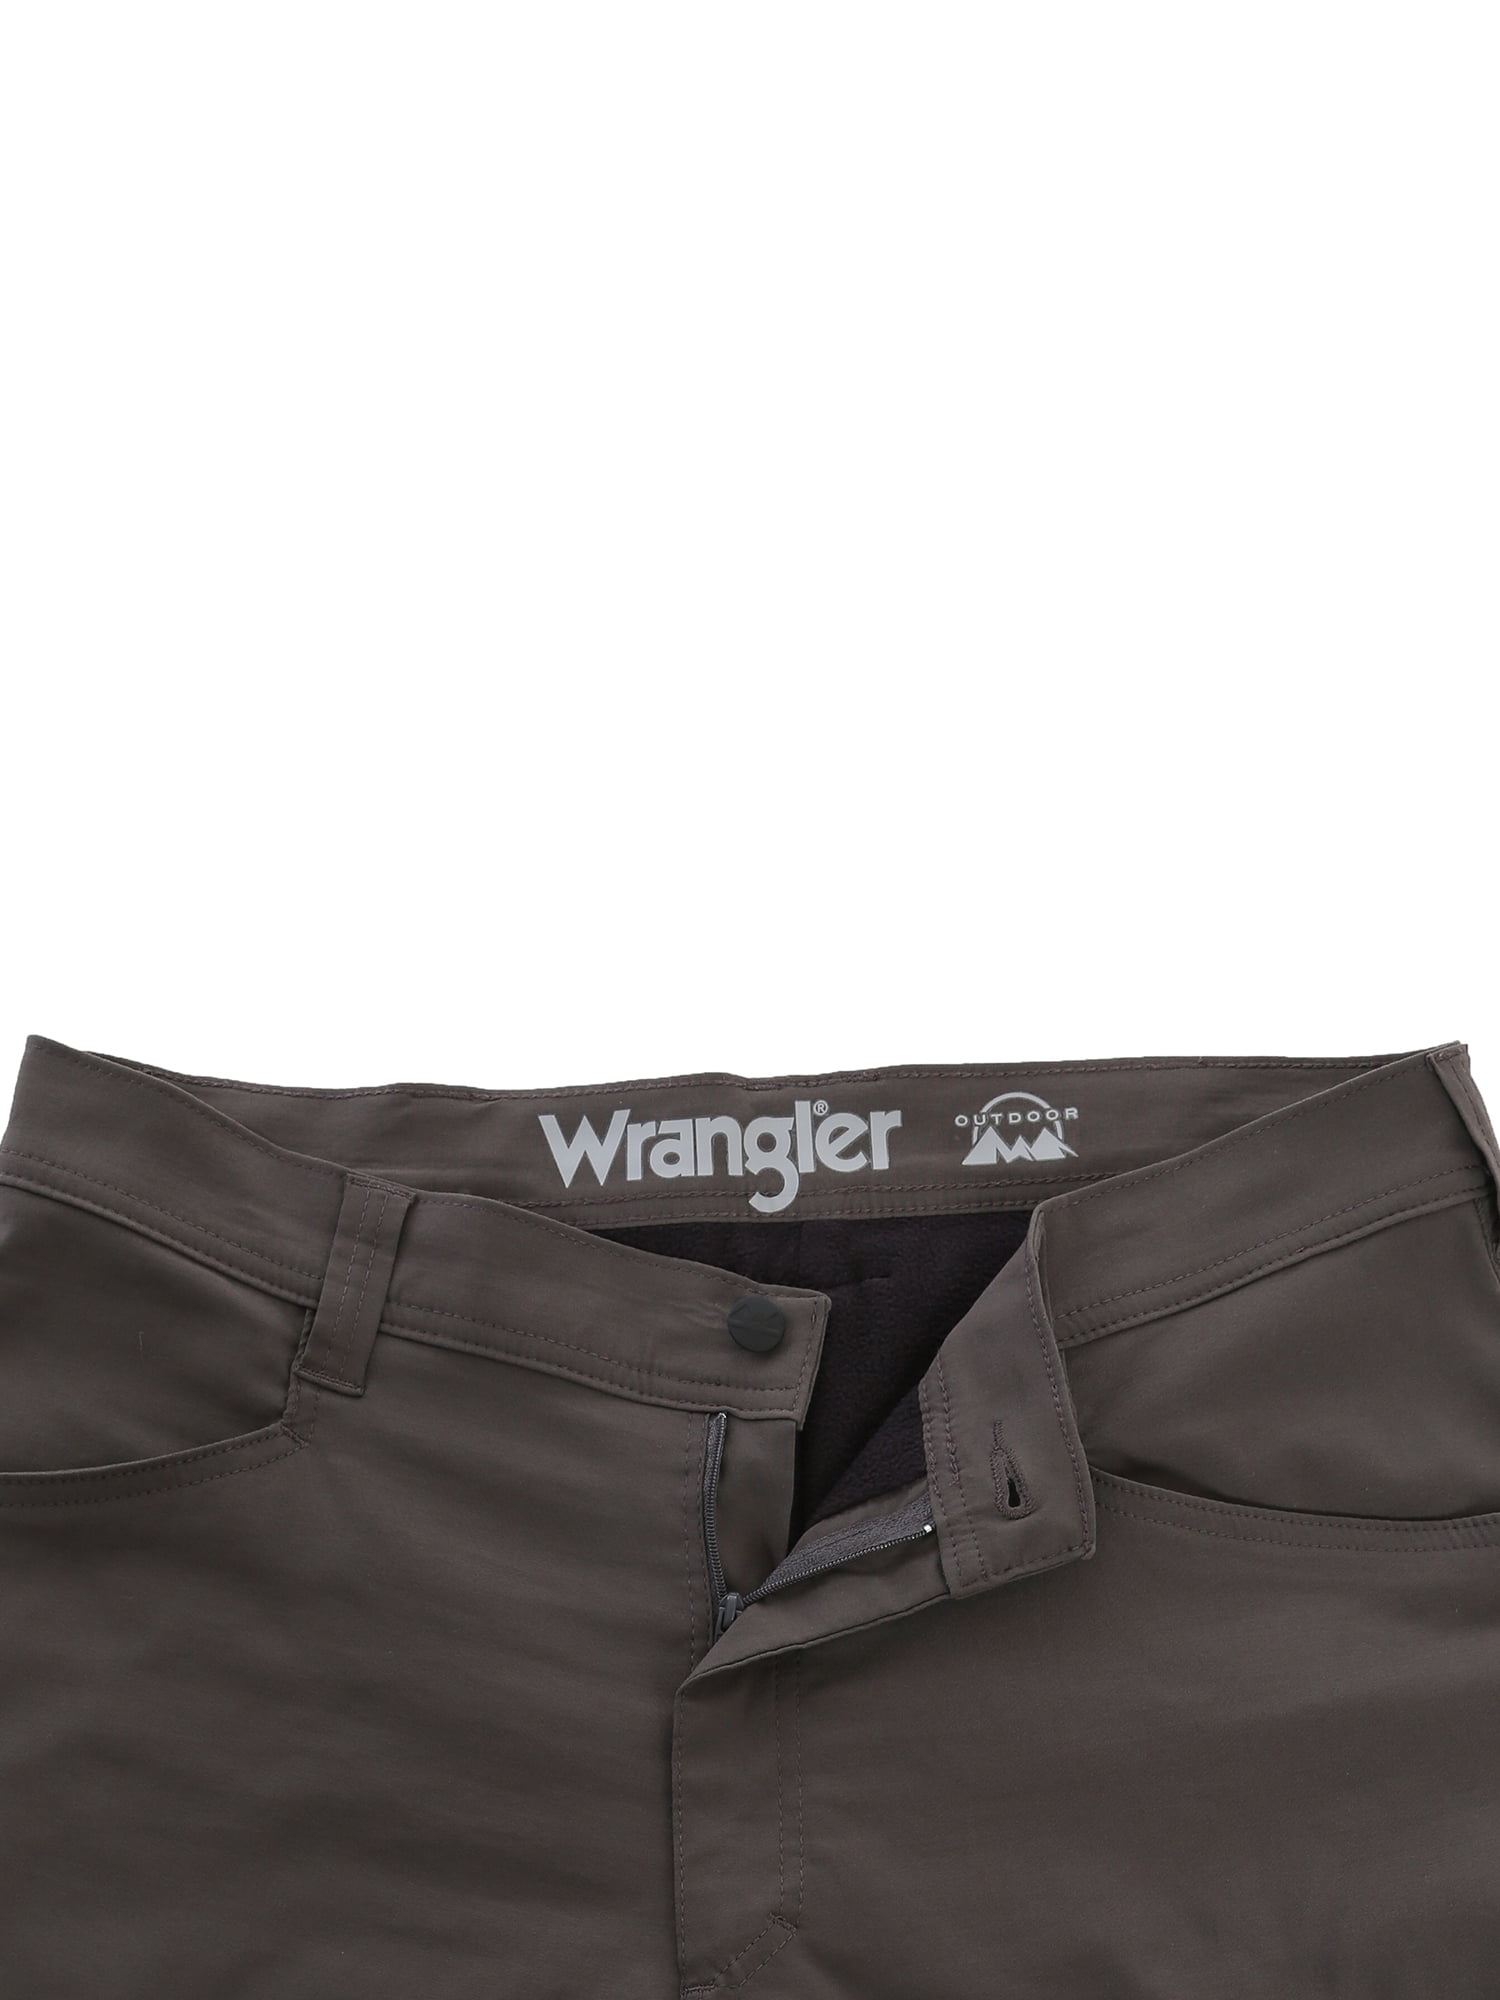 walmart wrangler fleece lined jeans